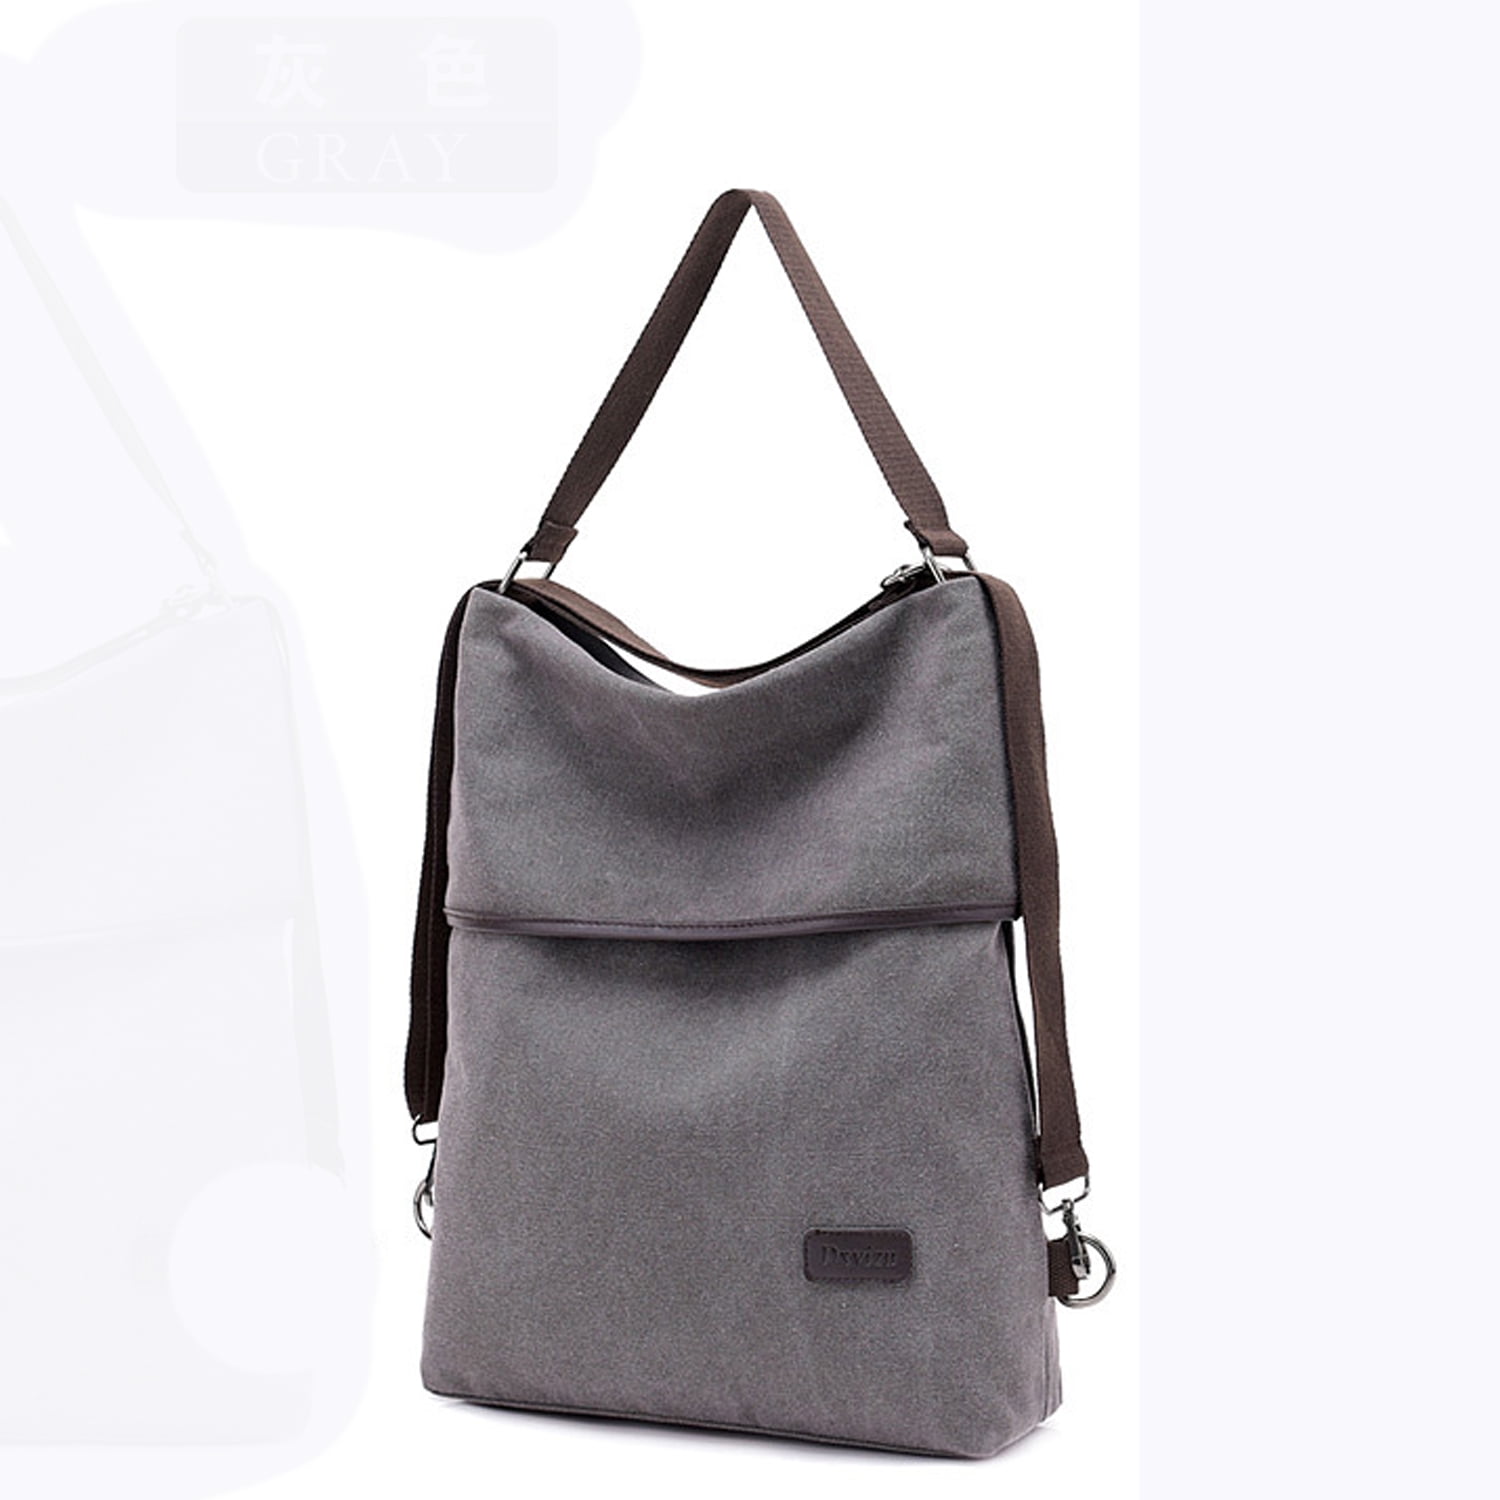 Multifunctional Large Capacity Couple Shoulder Bag / Backpack